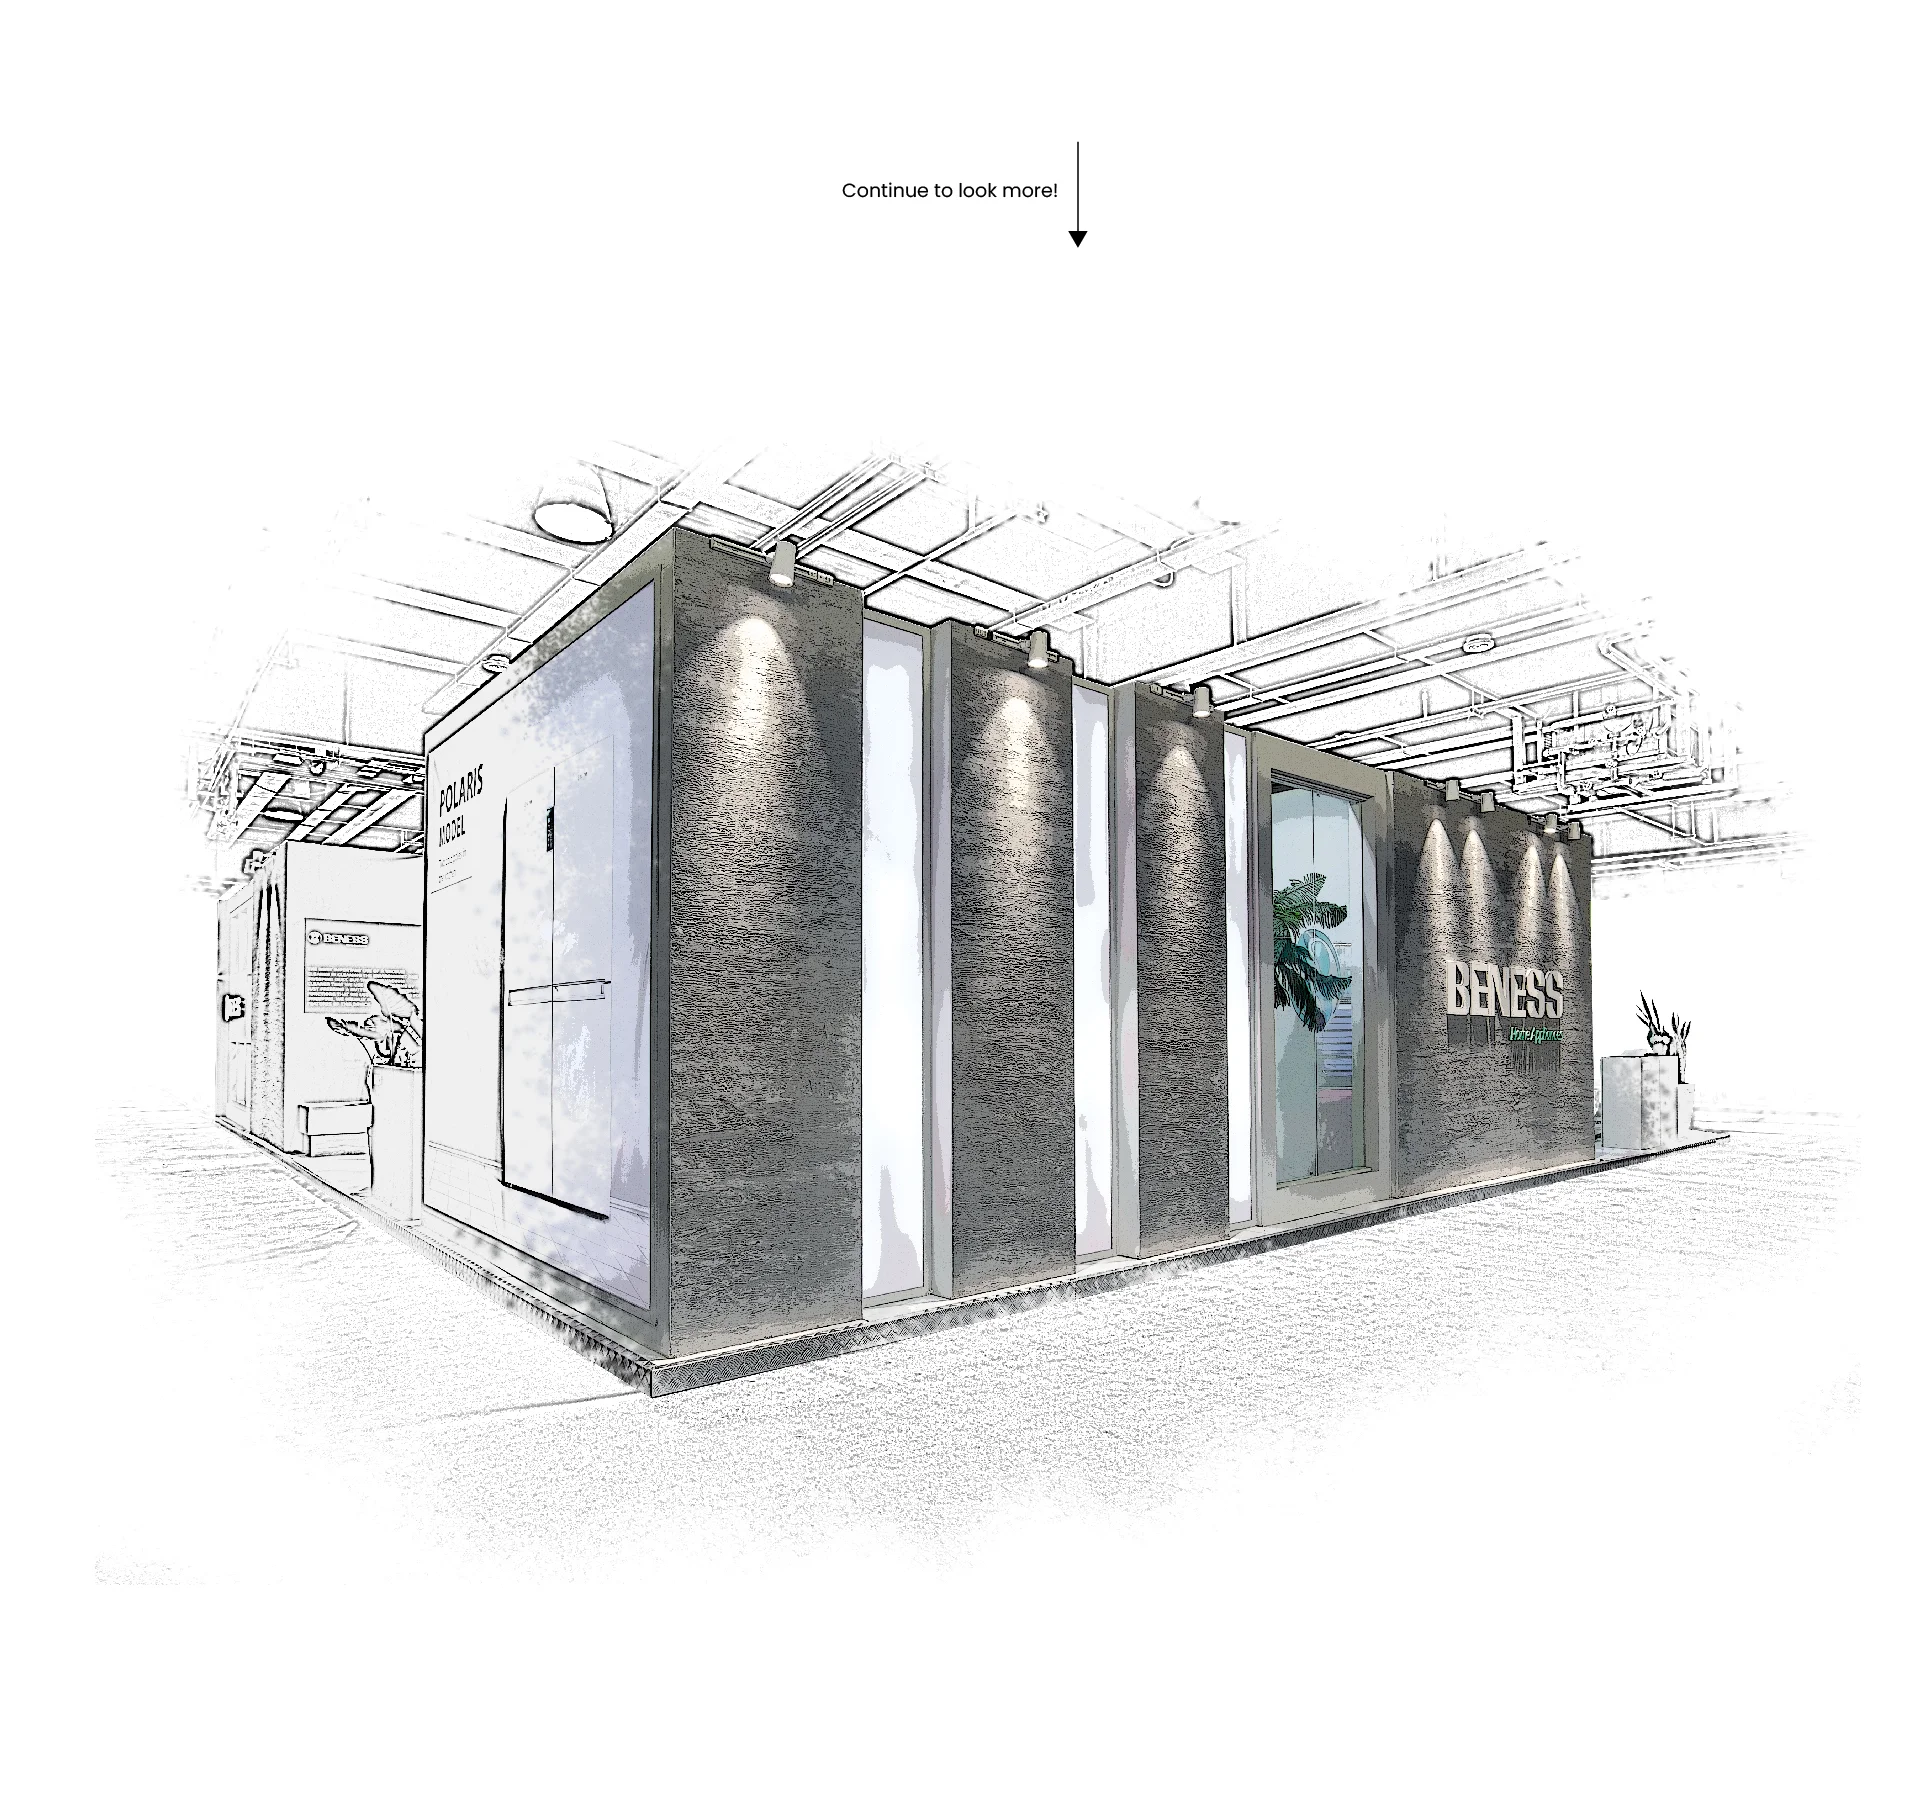   Beness-presentation-07 طراحی غرفه و غرفه سازی نمایشگاهی بنس نمایشگاه لوازم خانگی 1402 